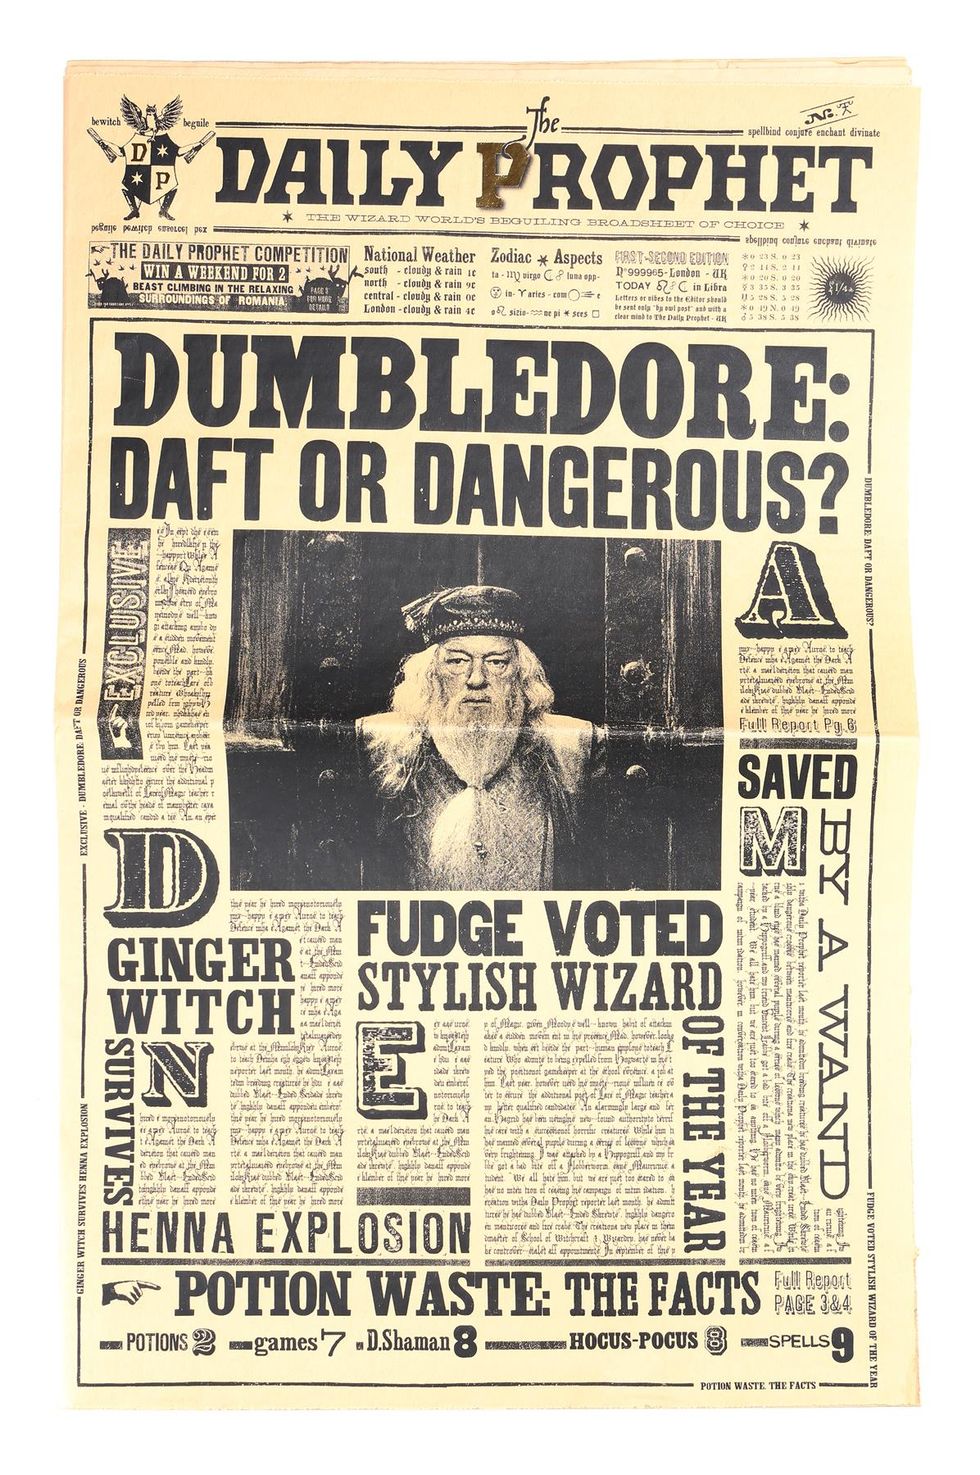 132312_Daily Prophet Dumbledore Draft Dangerous_1